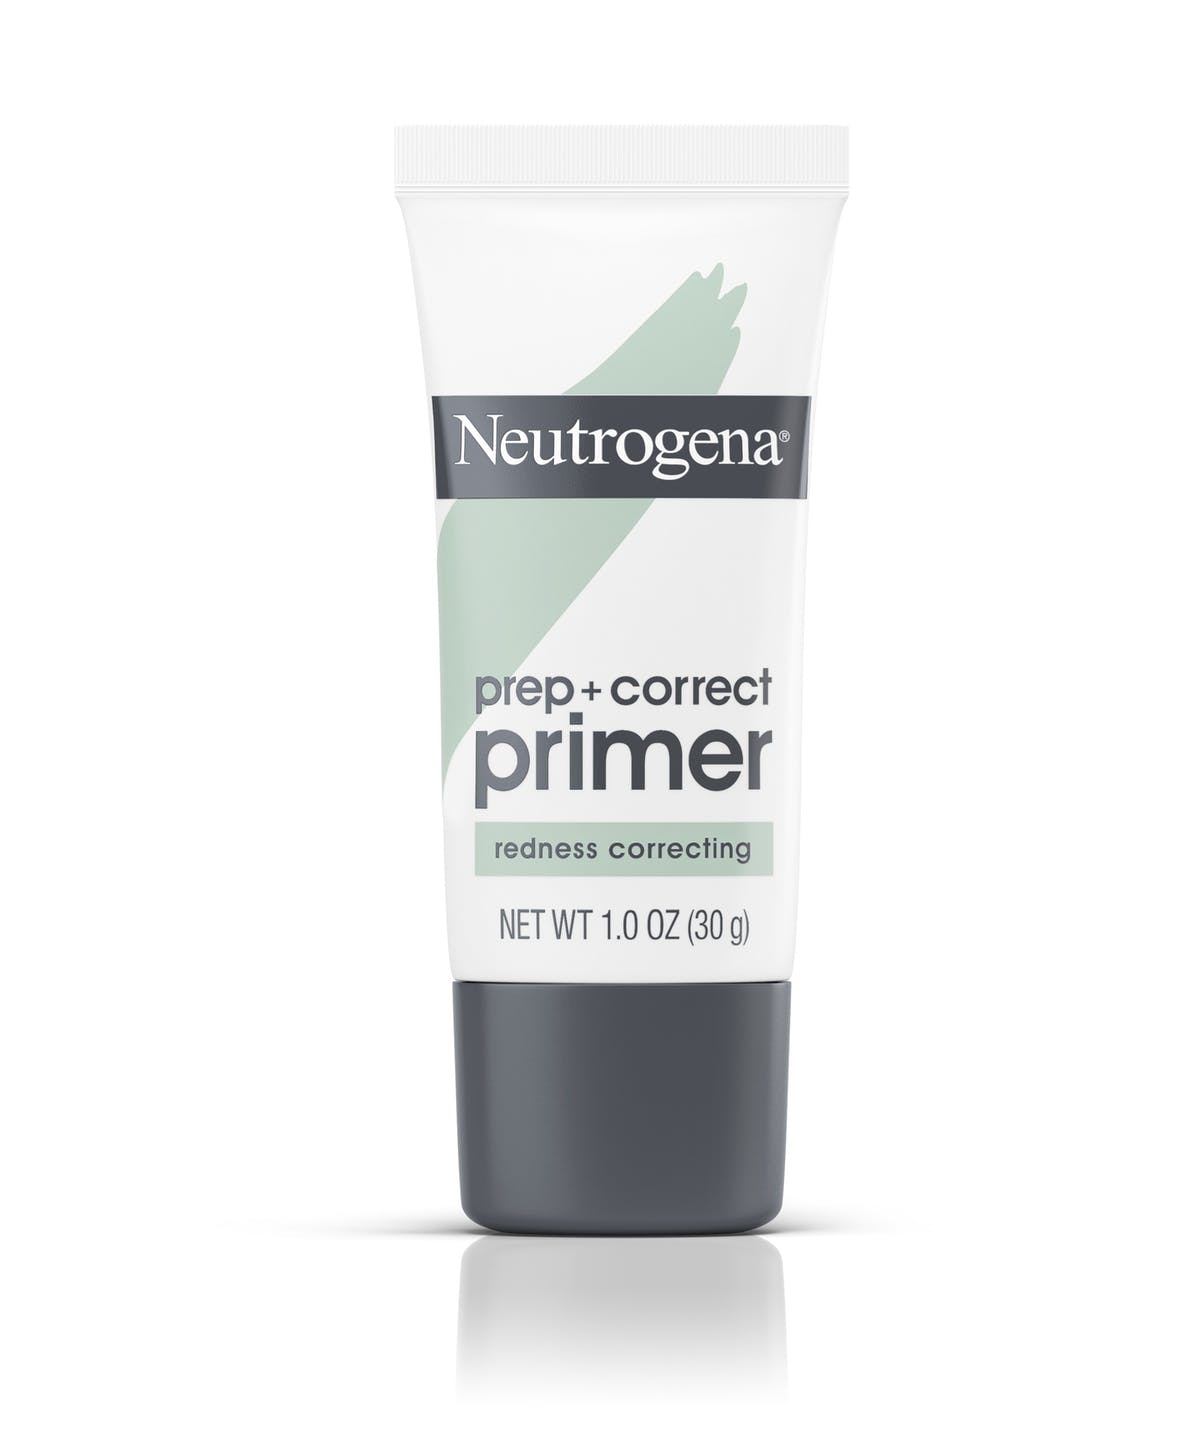 Neutrogena Prep + Correct Primer for Redness Correcting, Green-Toned Matte Makeup Primer, 1.0 oz